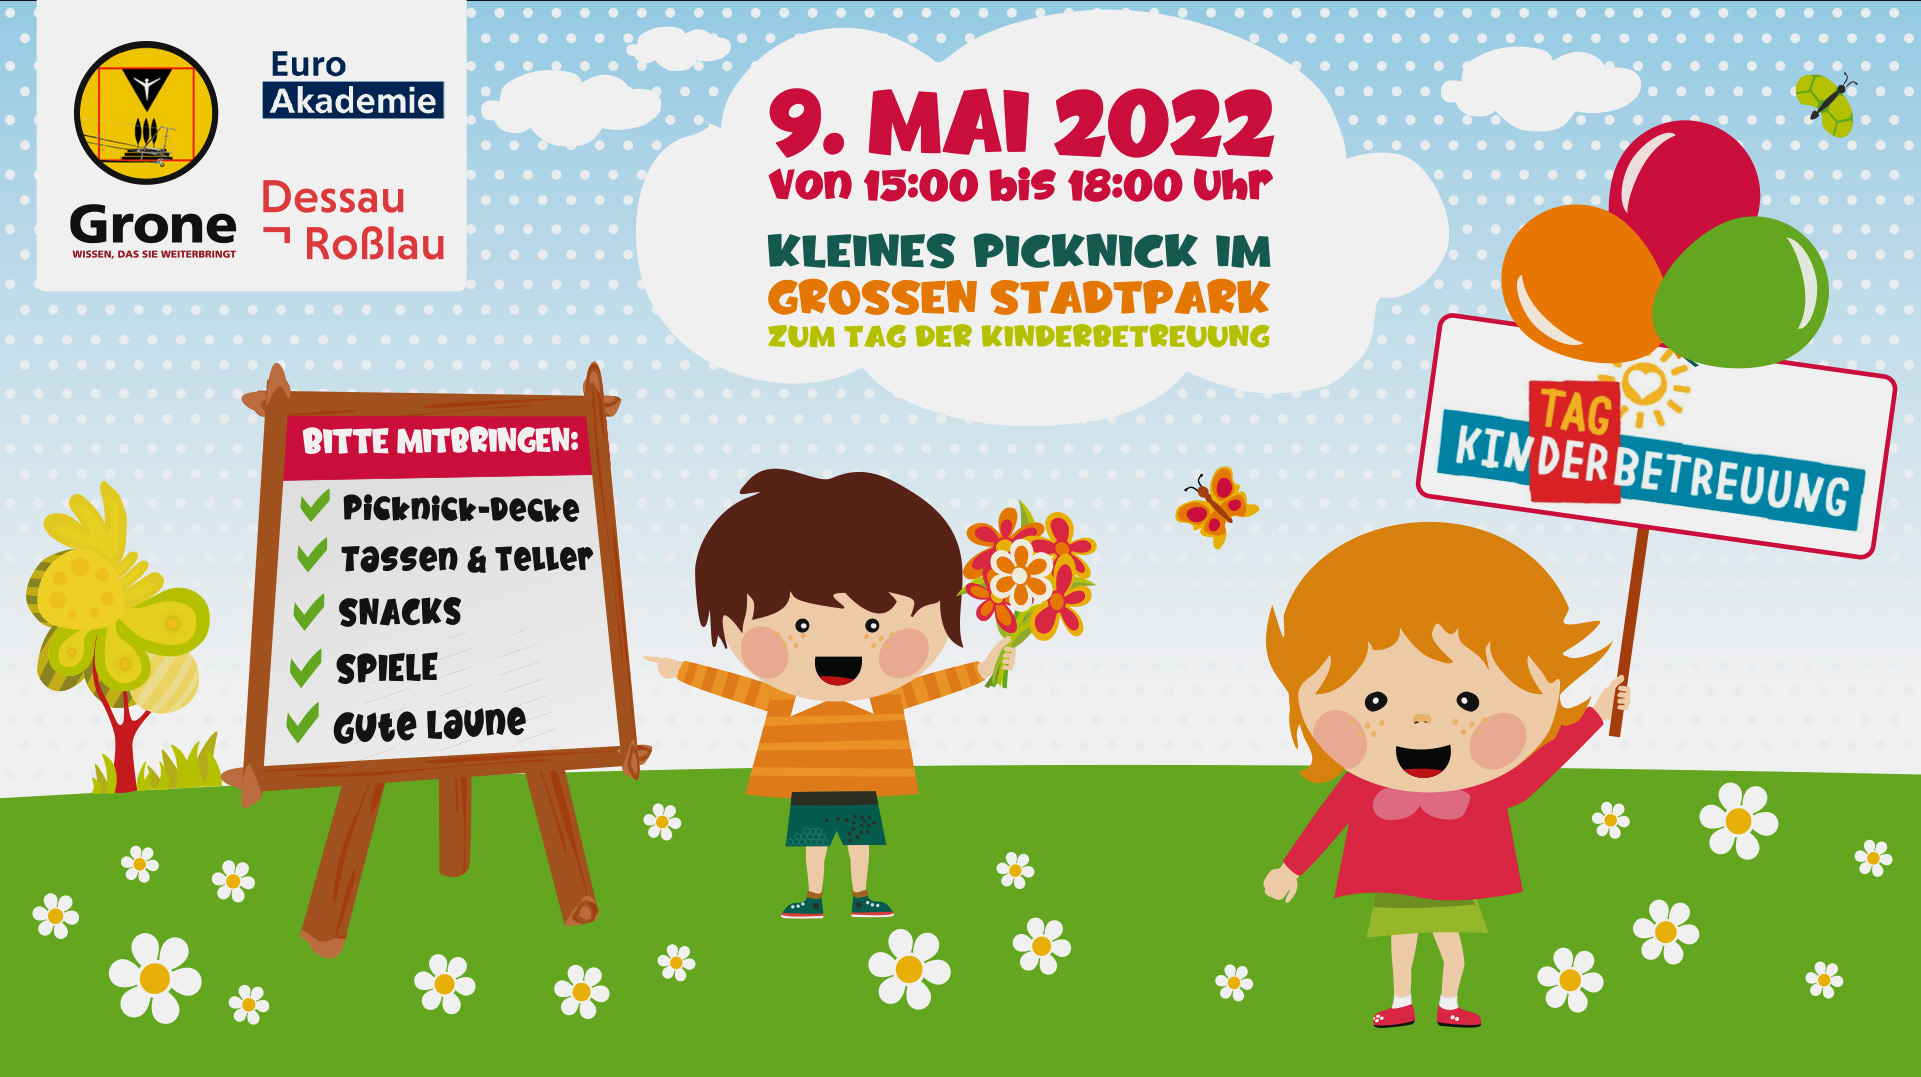 Familien-Picknick zum Tag der Kinderbetreuung 2022